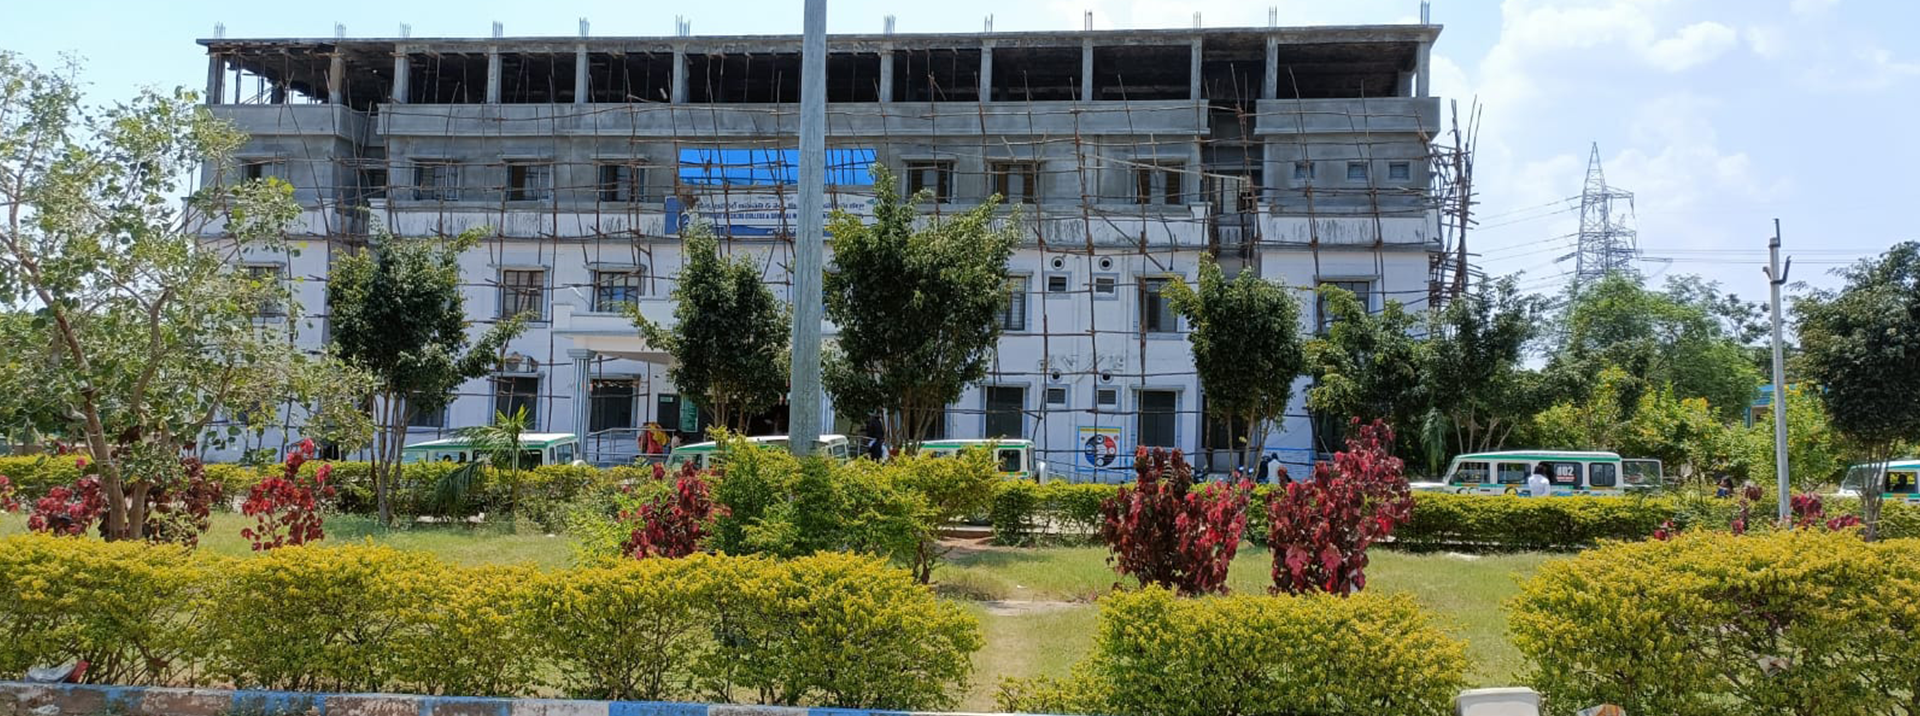 Government Medical College, Jangaon